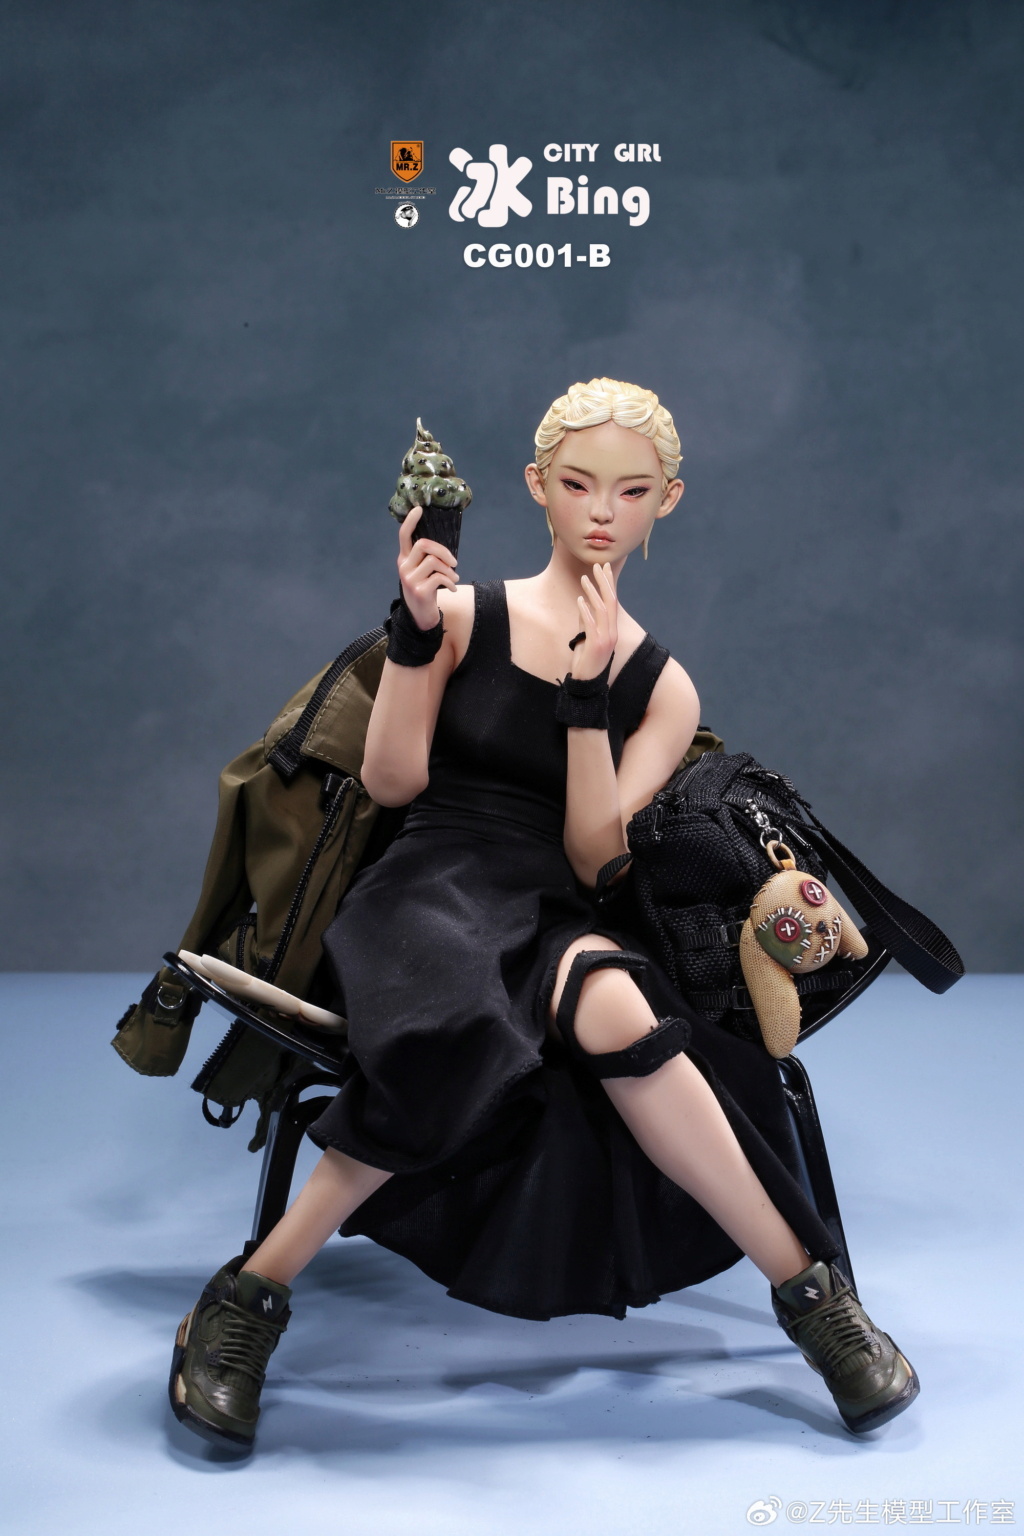 girl - NEW PRODUCT: Mr.Z model studio - city series first urban girl Mu & Bing #CG001-A/B 6b270b29